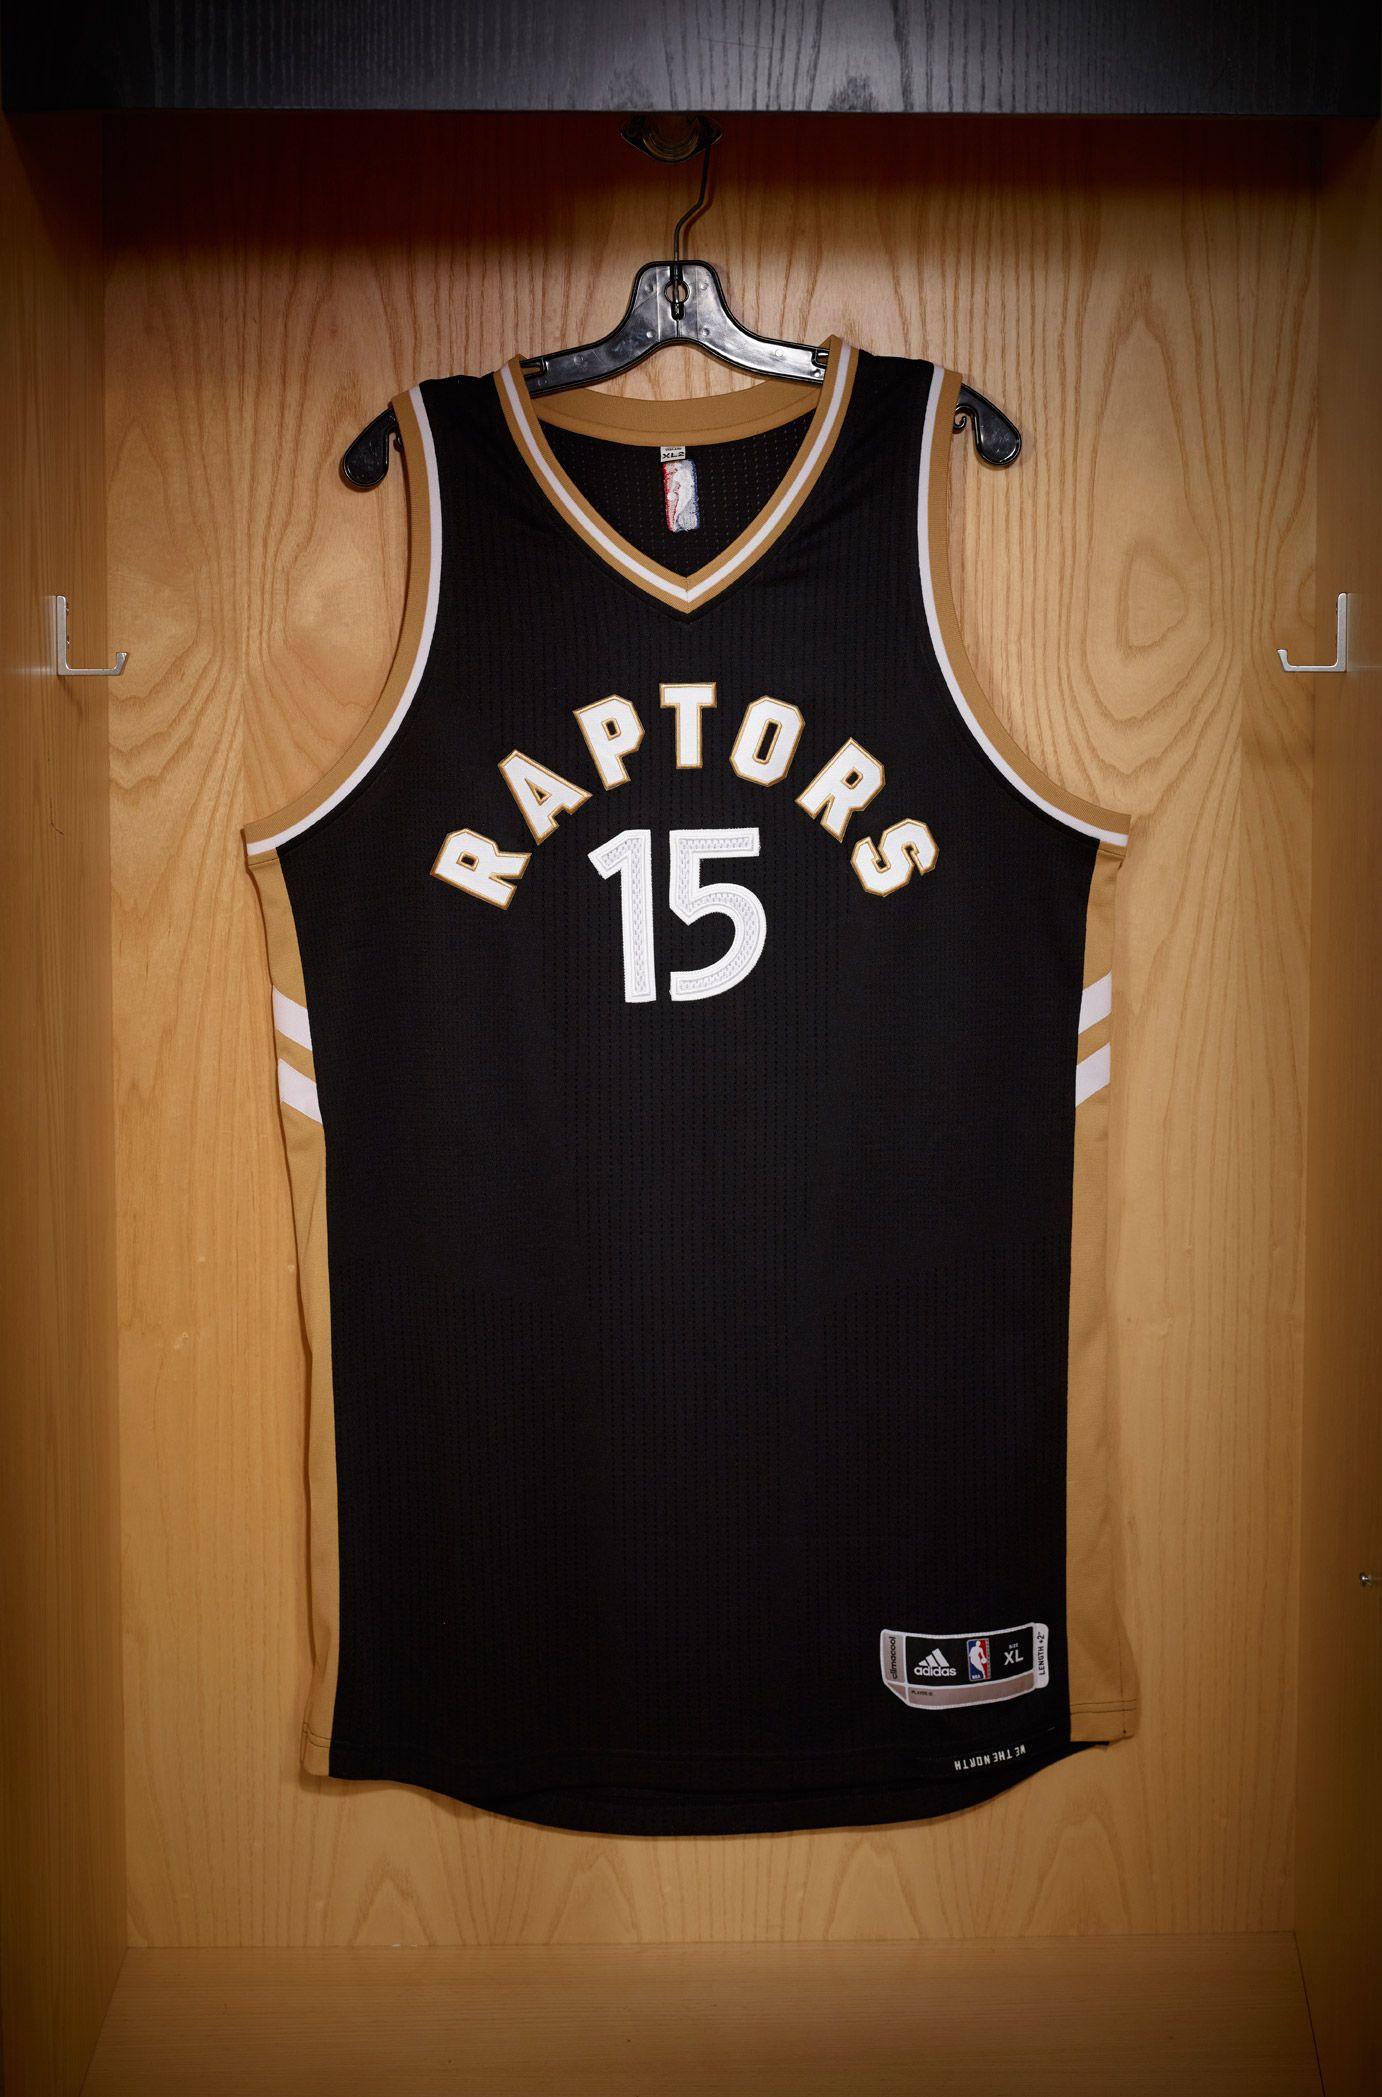 Ovo Raptors Logo - Raptors unveil new uniforms for 2015-16 season - Sportsnet.ca